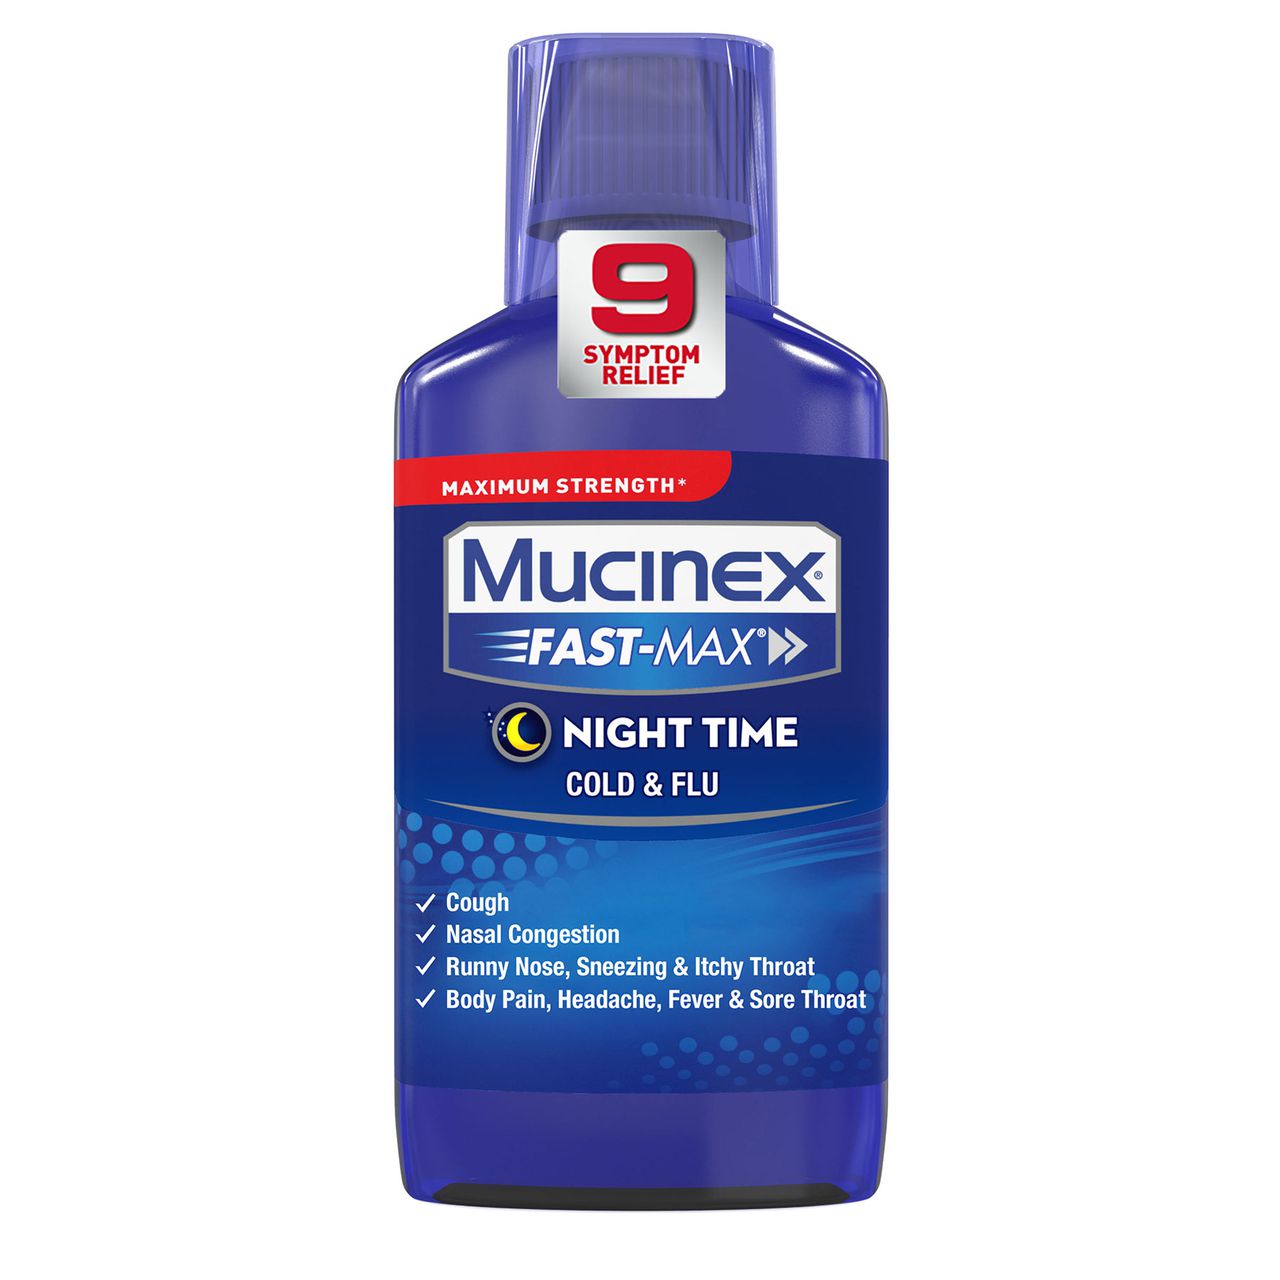 mucinex-maximum-strength-12-hour-chest-congestion-expectorant-tablets